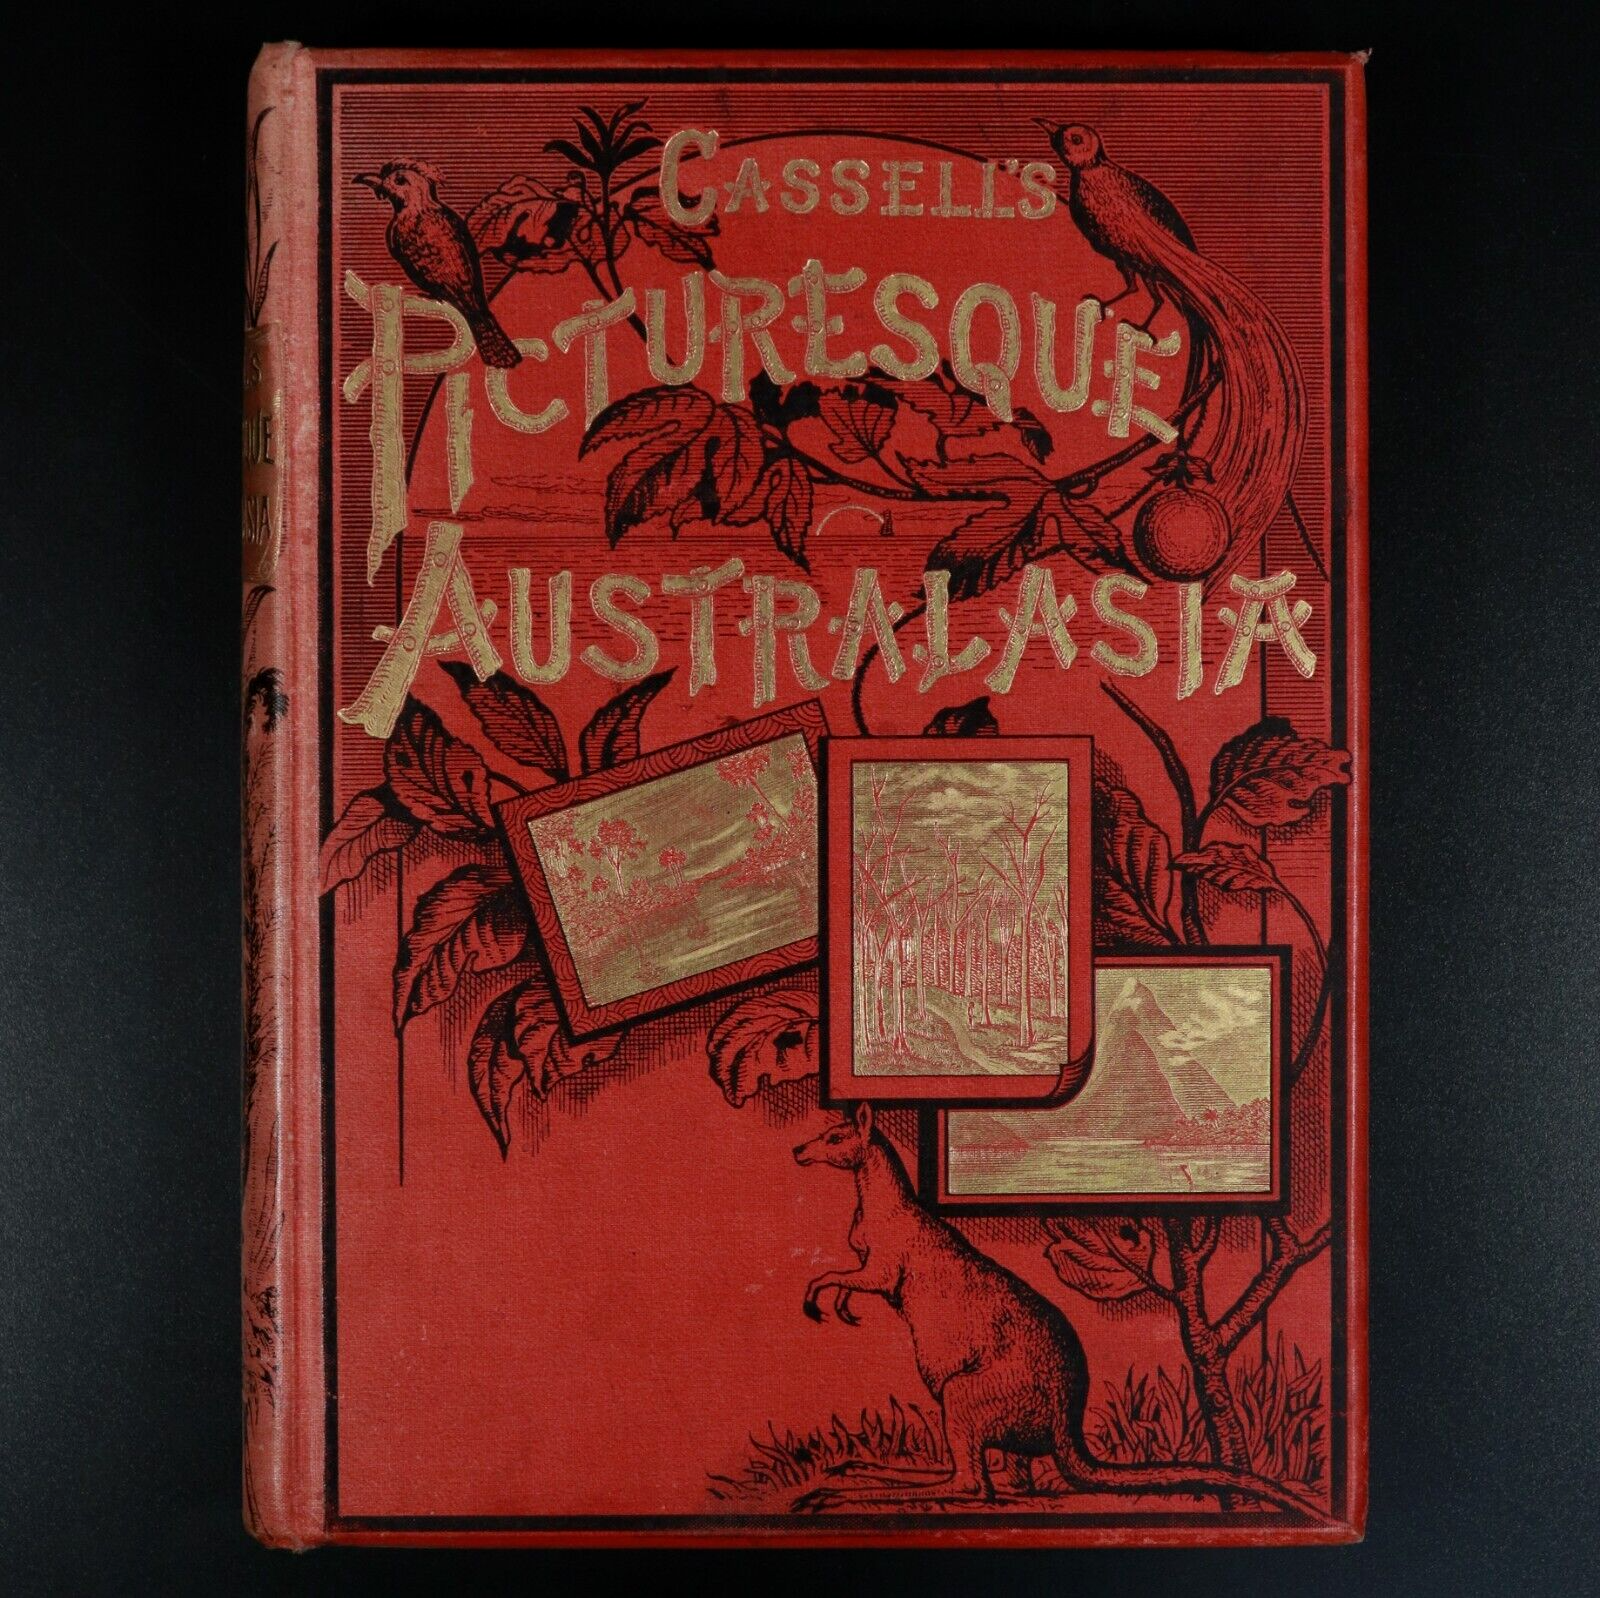 1887 Cassell's Picturesque Australasia Antiquarian Australian History Book - 0